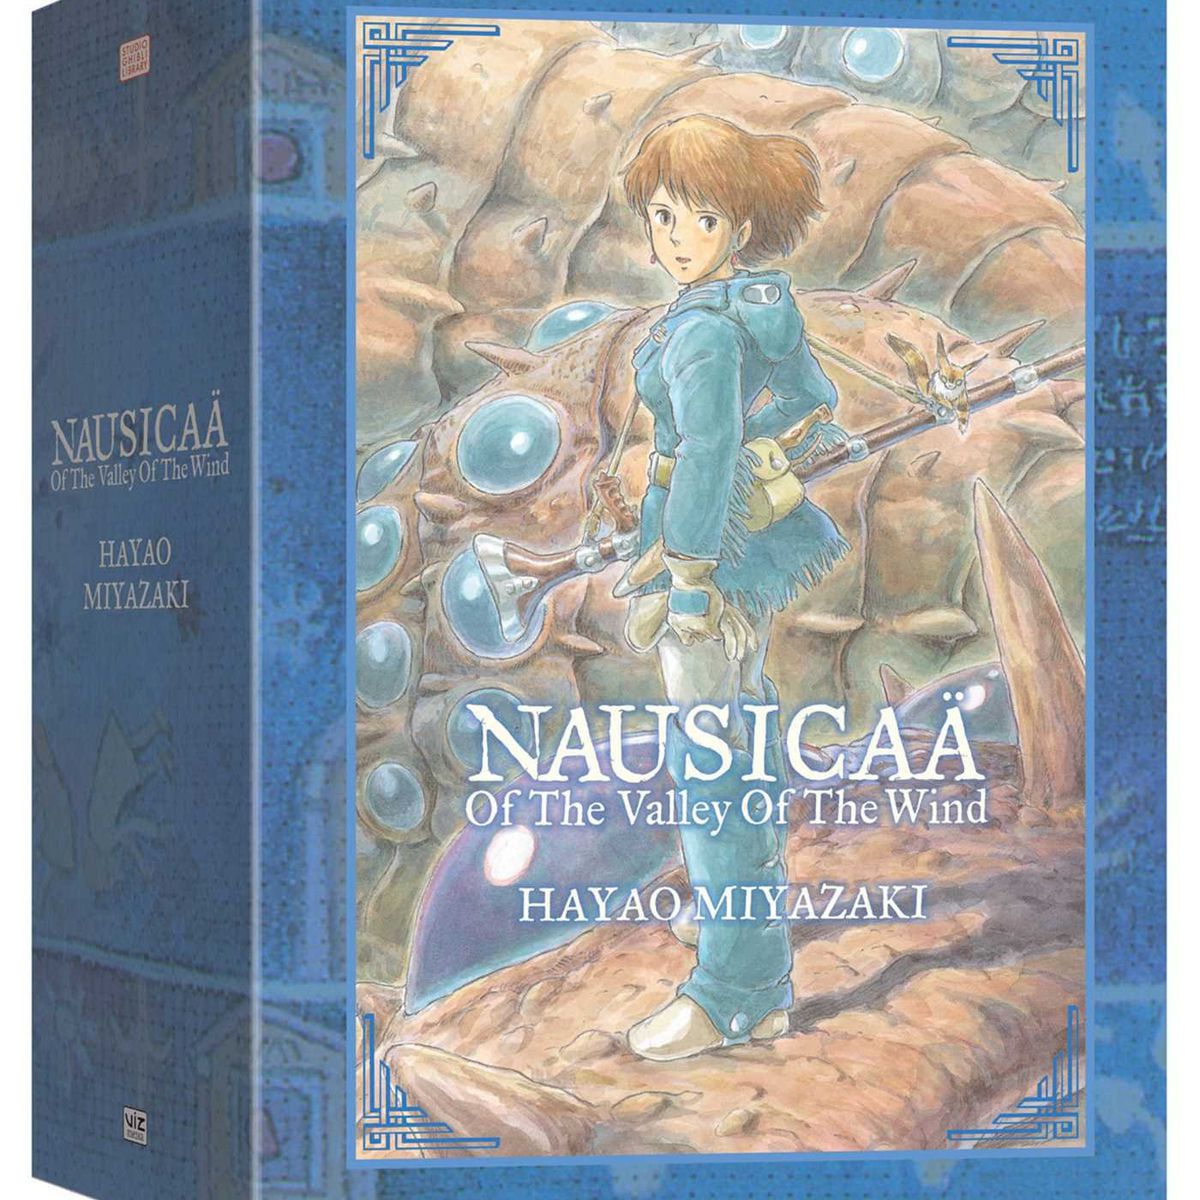 Nausicaä of the Valley of the Wind manga box set